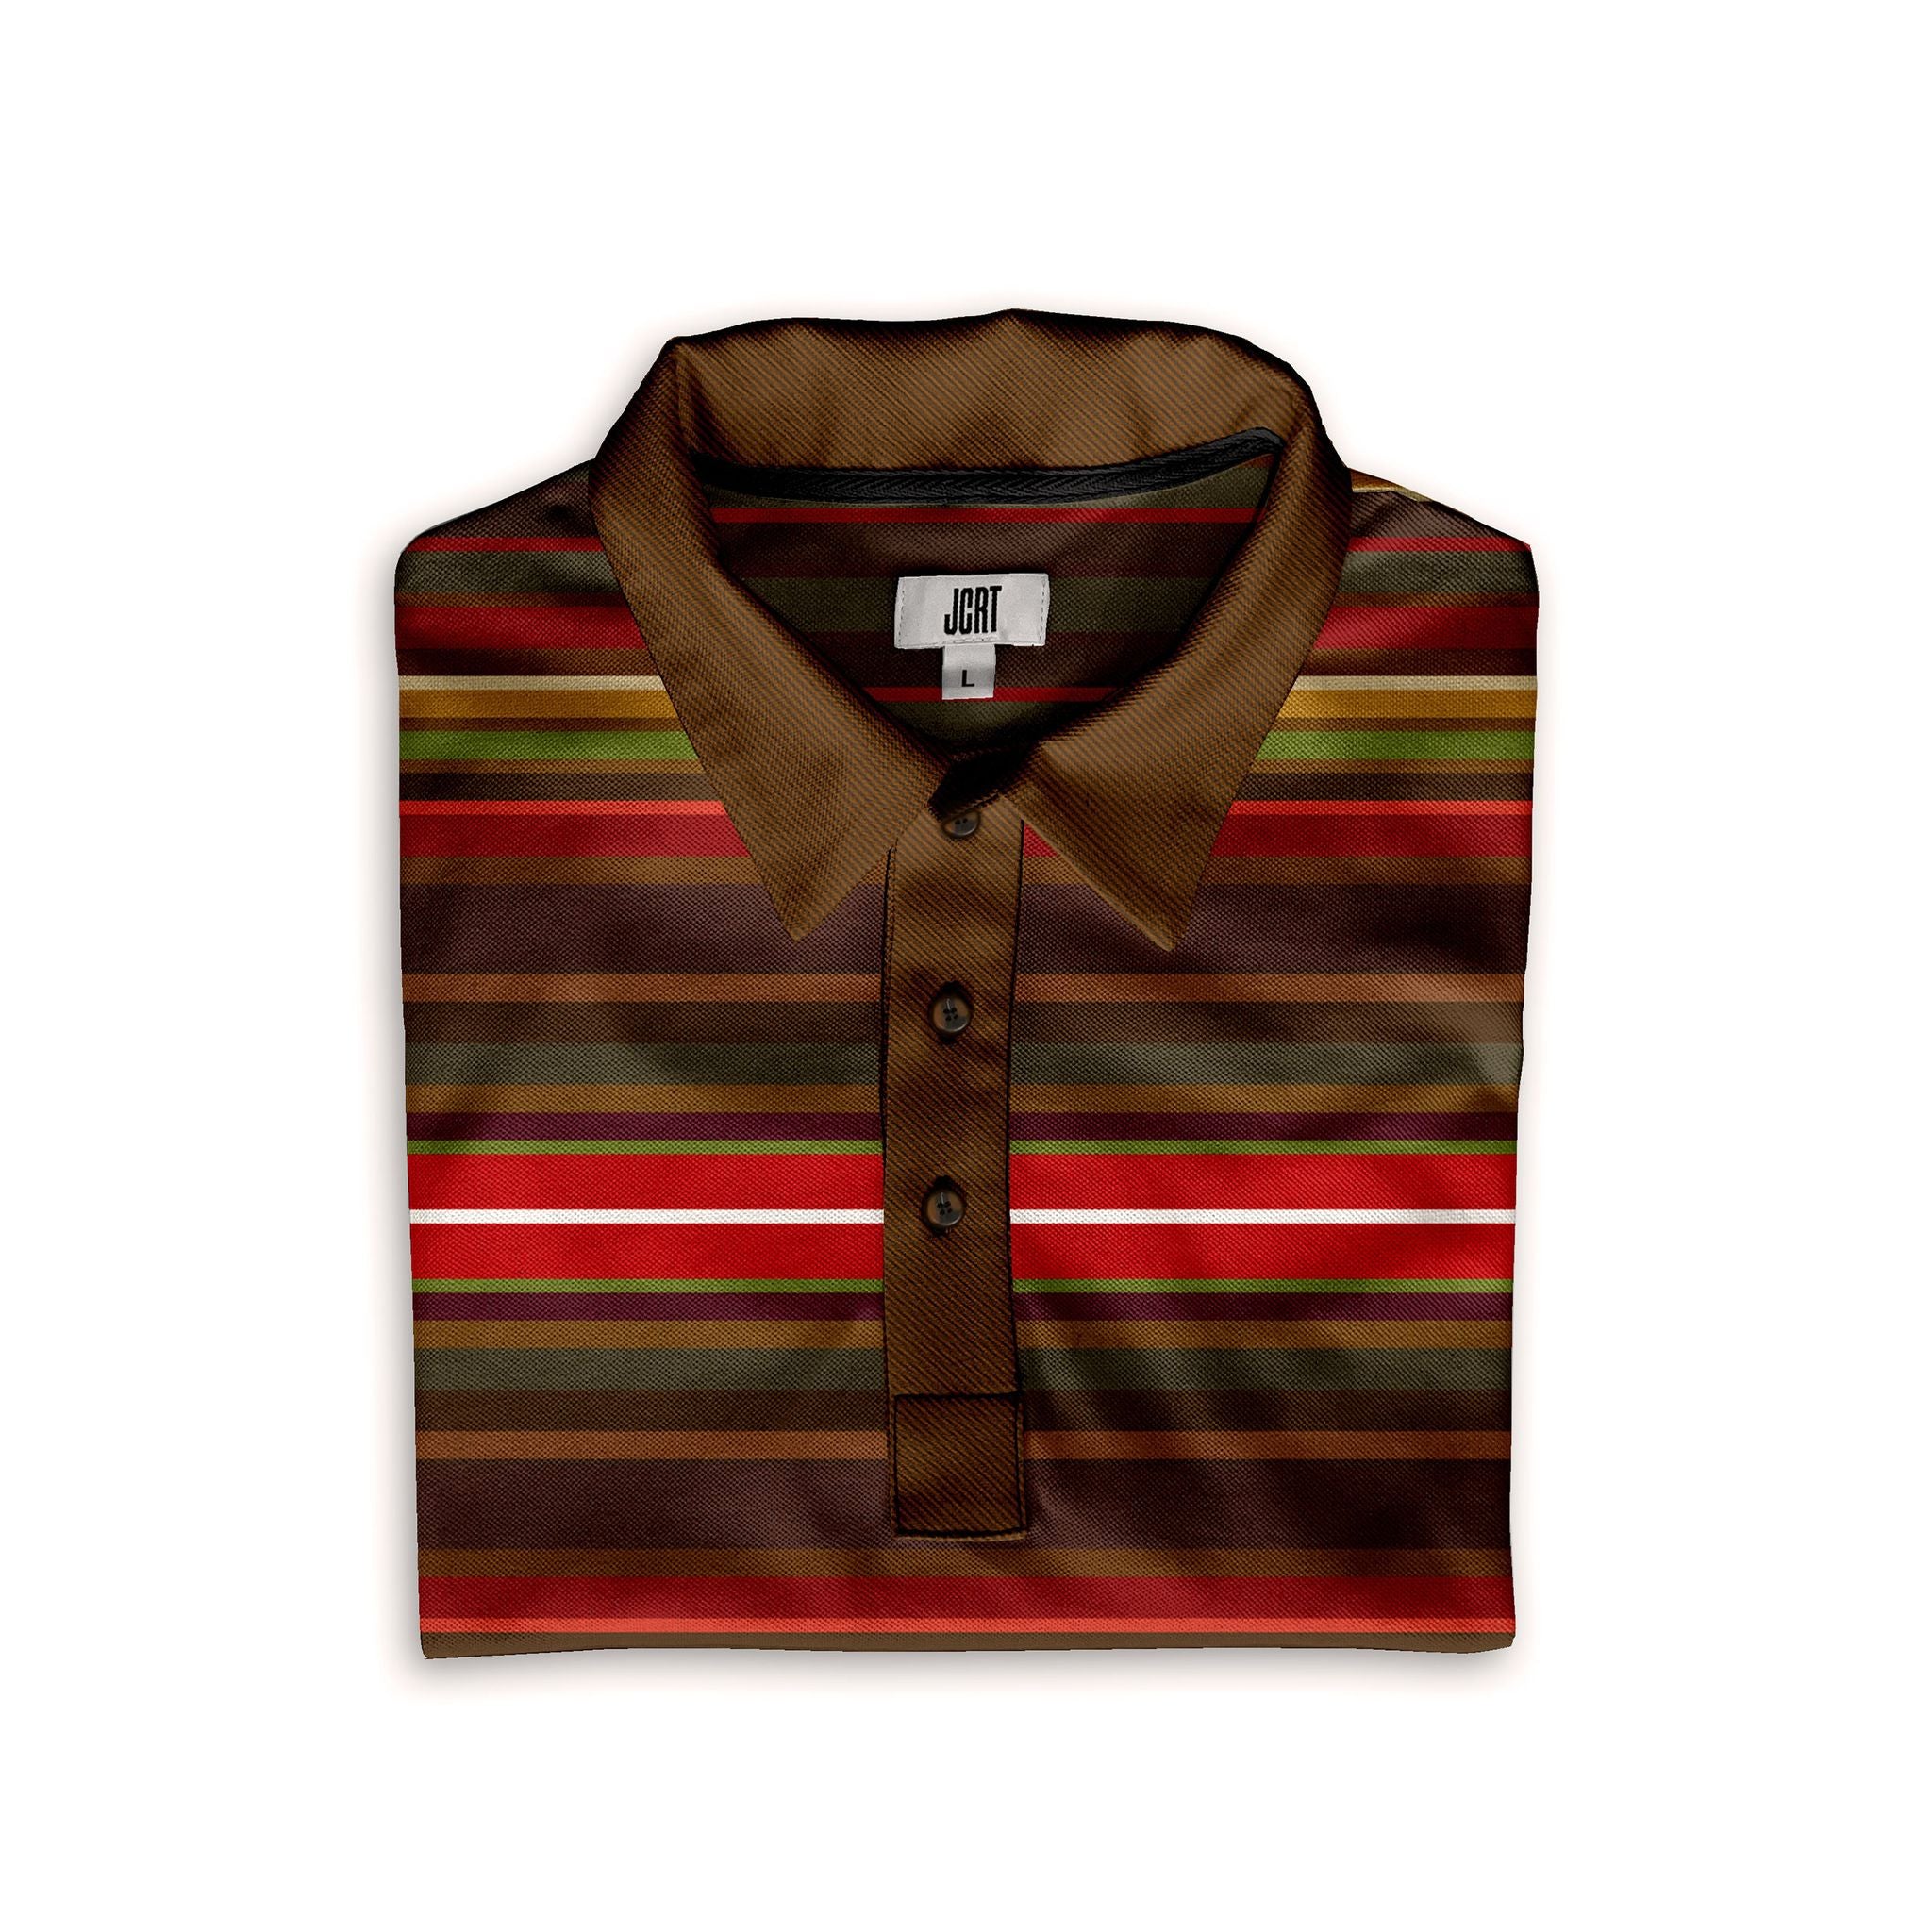 The Tabula Rasa Stripe JCRT Polo Shirt